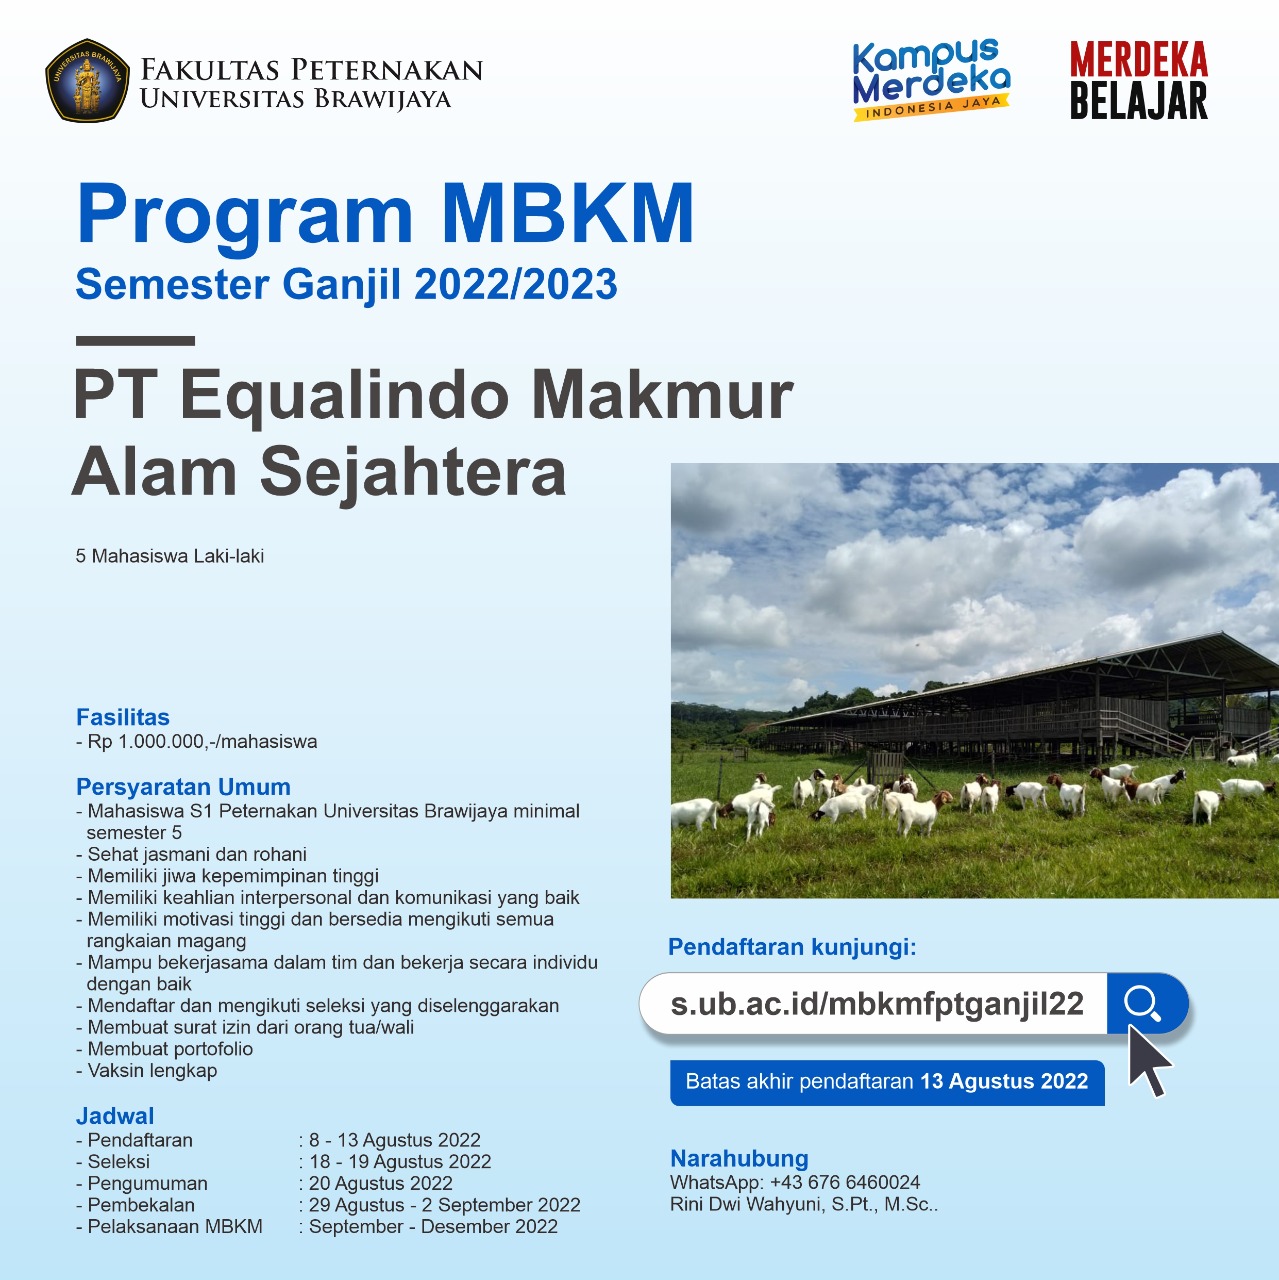 MBKM Program Odd Semester 2022/2023 PT. Equalindo Makmur Alam Sejahtera